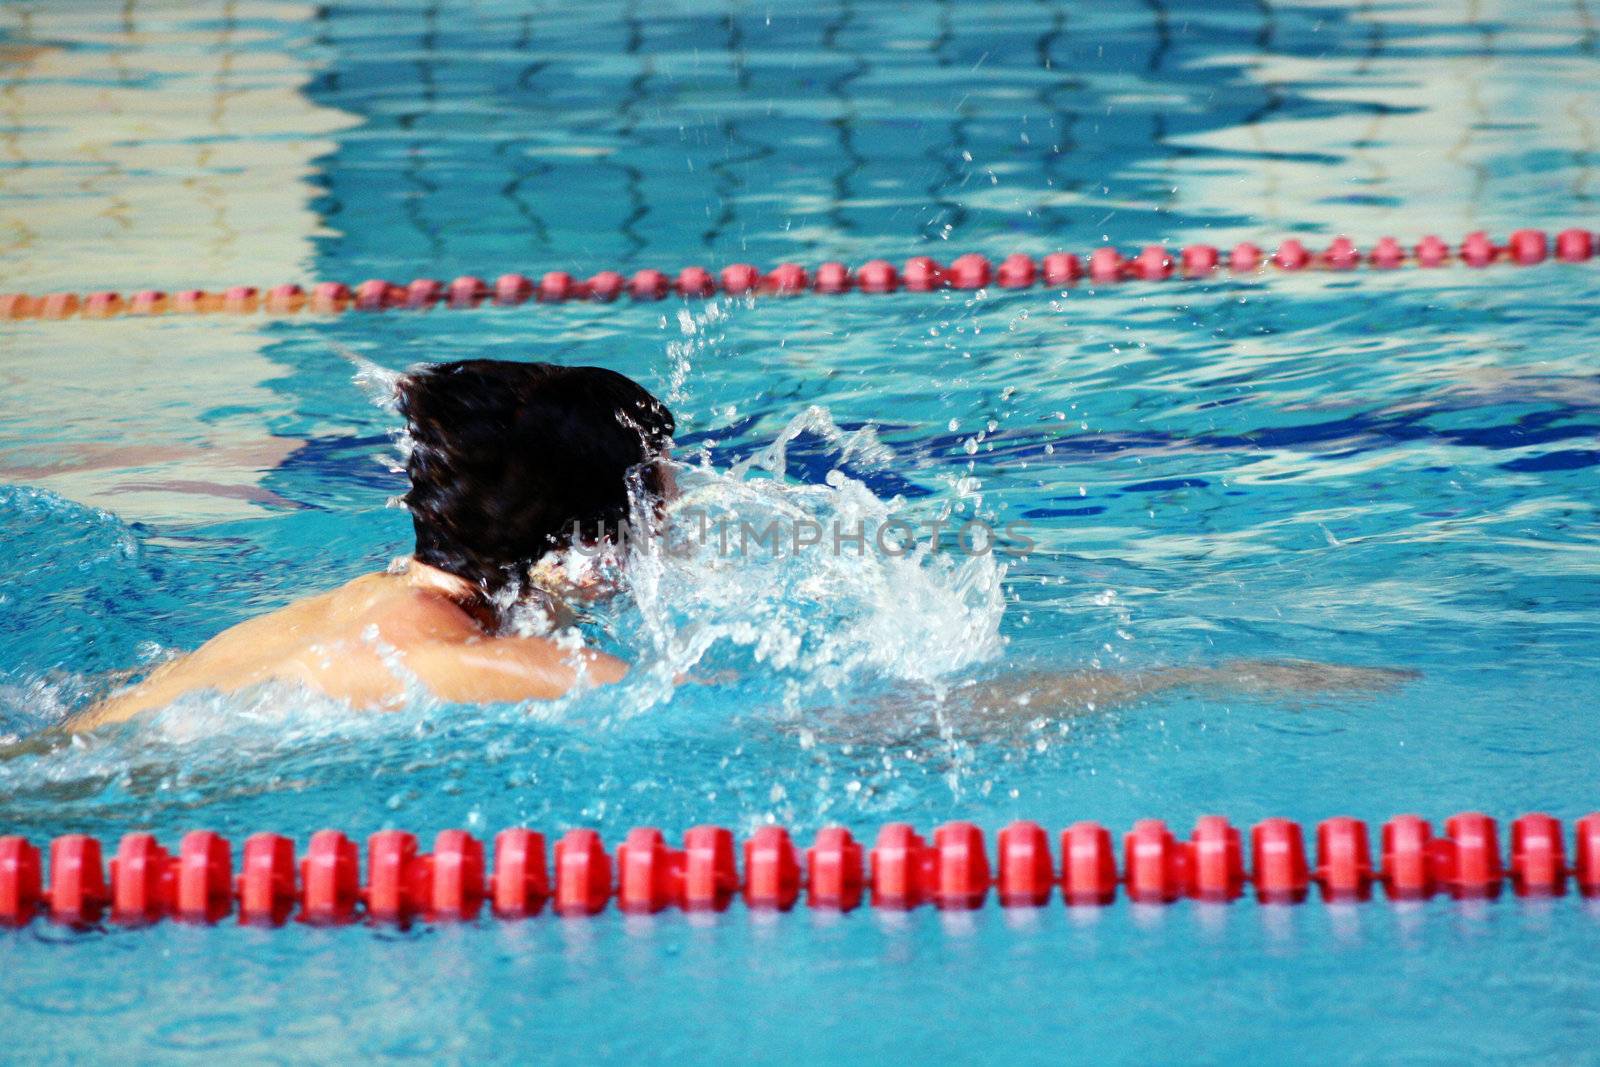 swimmer in water by photochecker